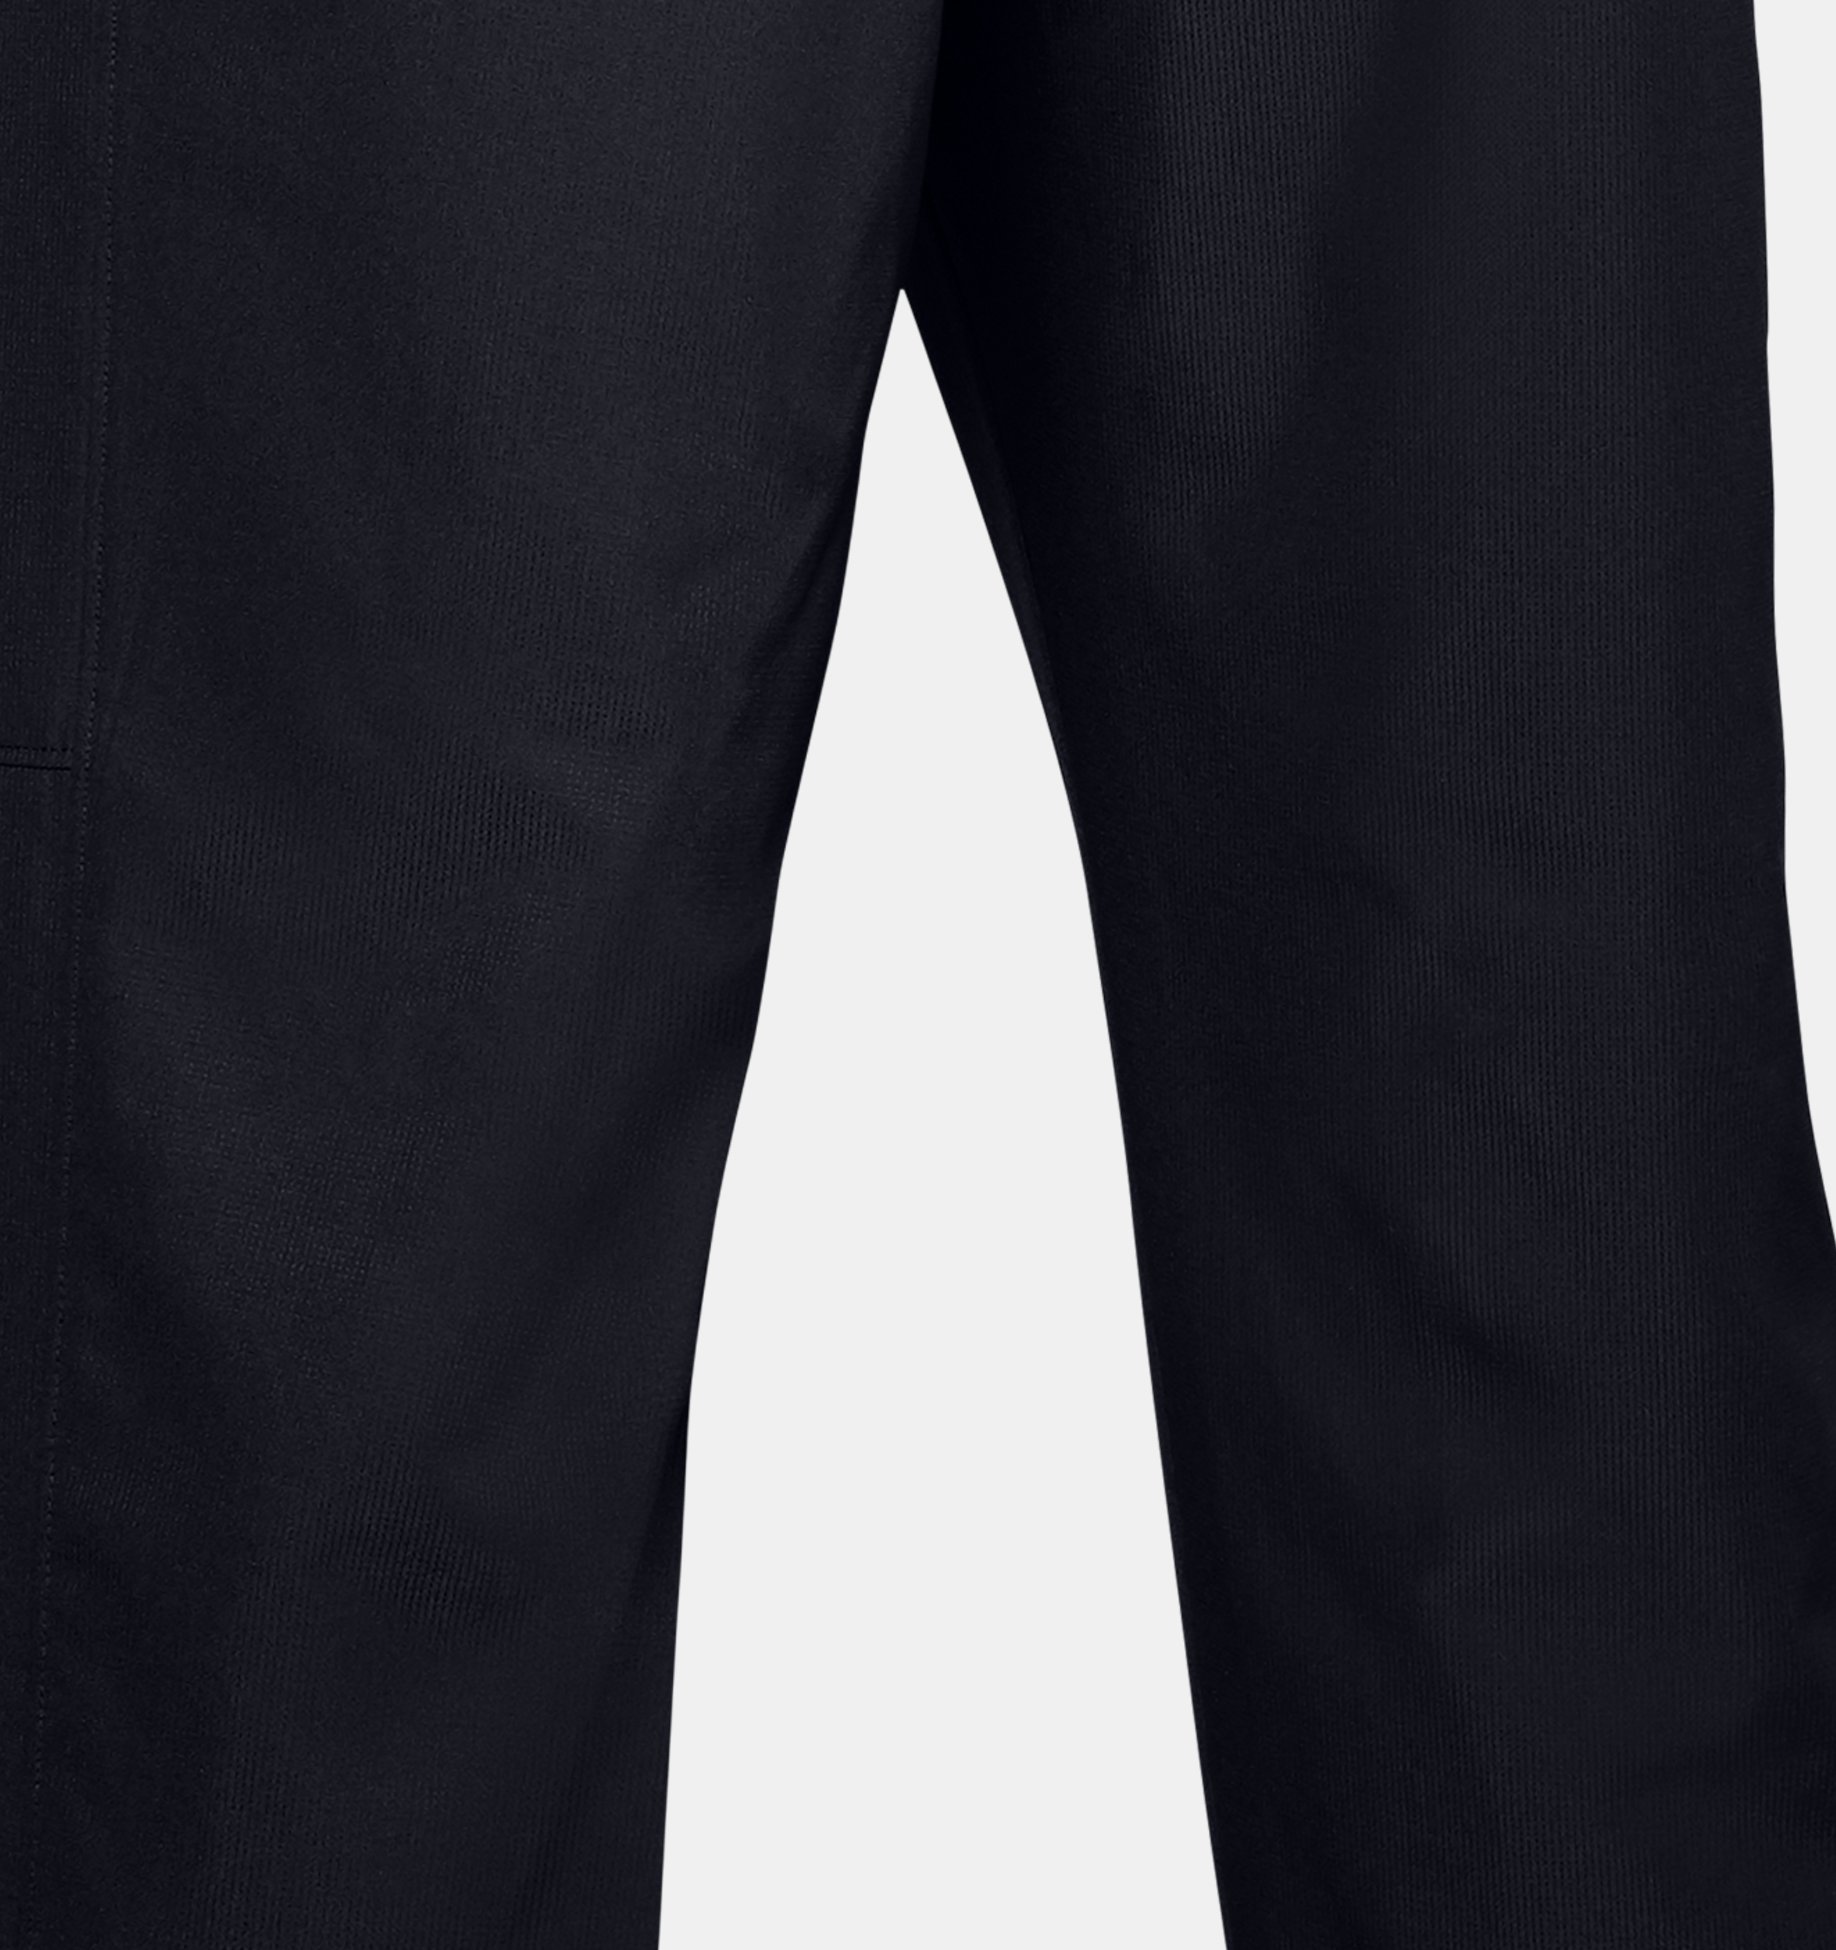 Under Armour 293533 Men's Standard Woven Vital Workout Pants, Gray/Black, M